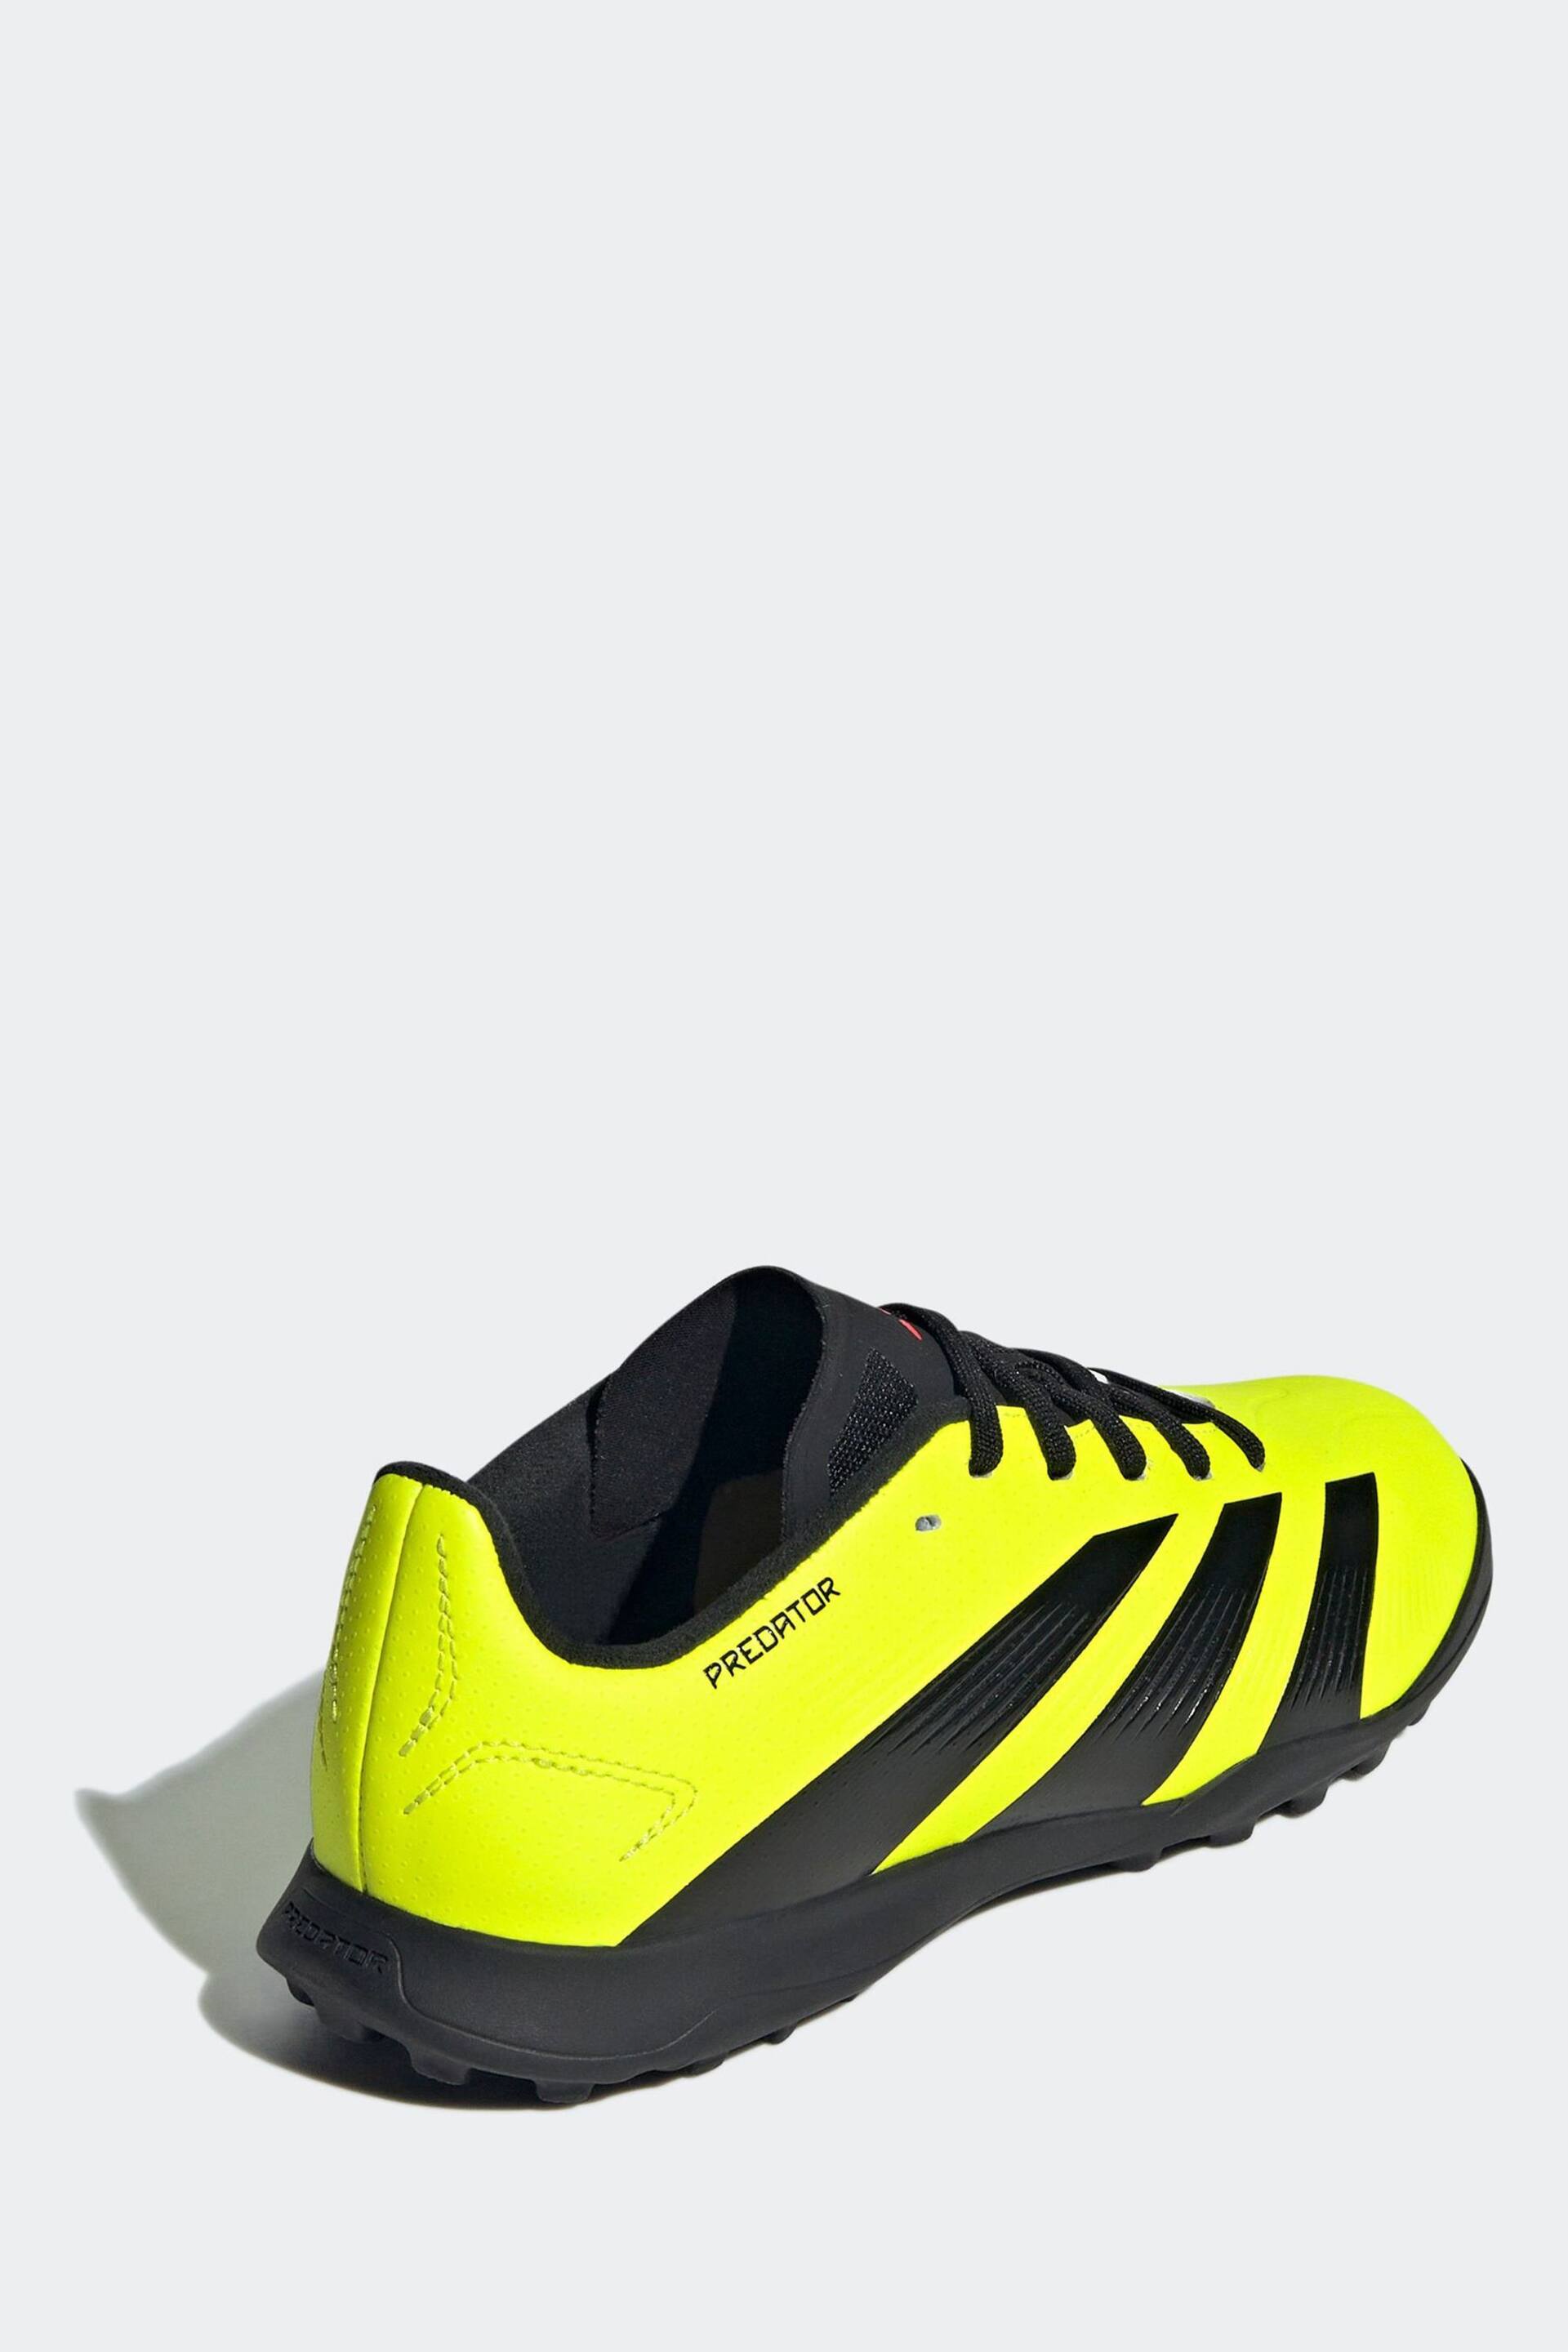 adidas Yellow Predator 24 League Turf Boots - Image 5 of 20